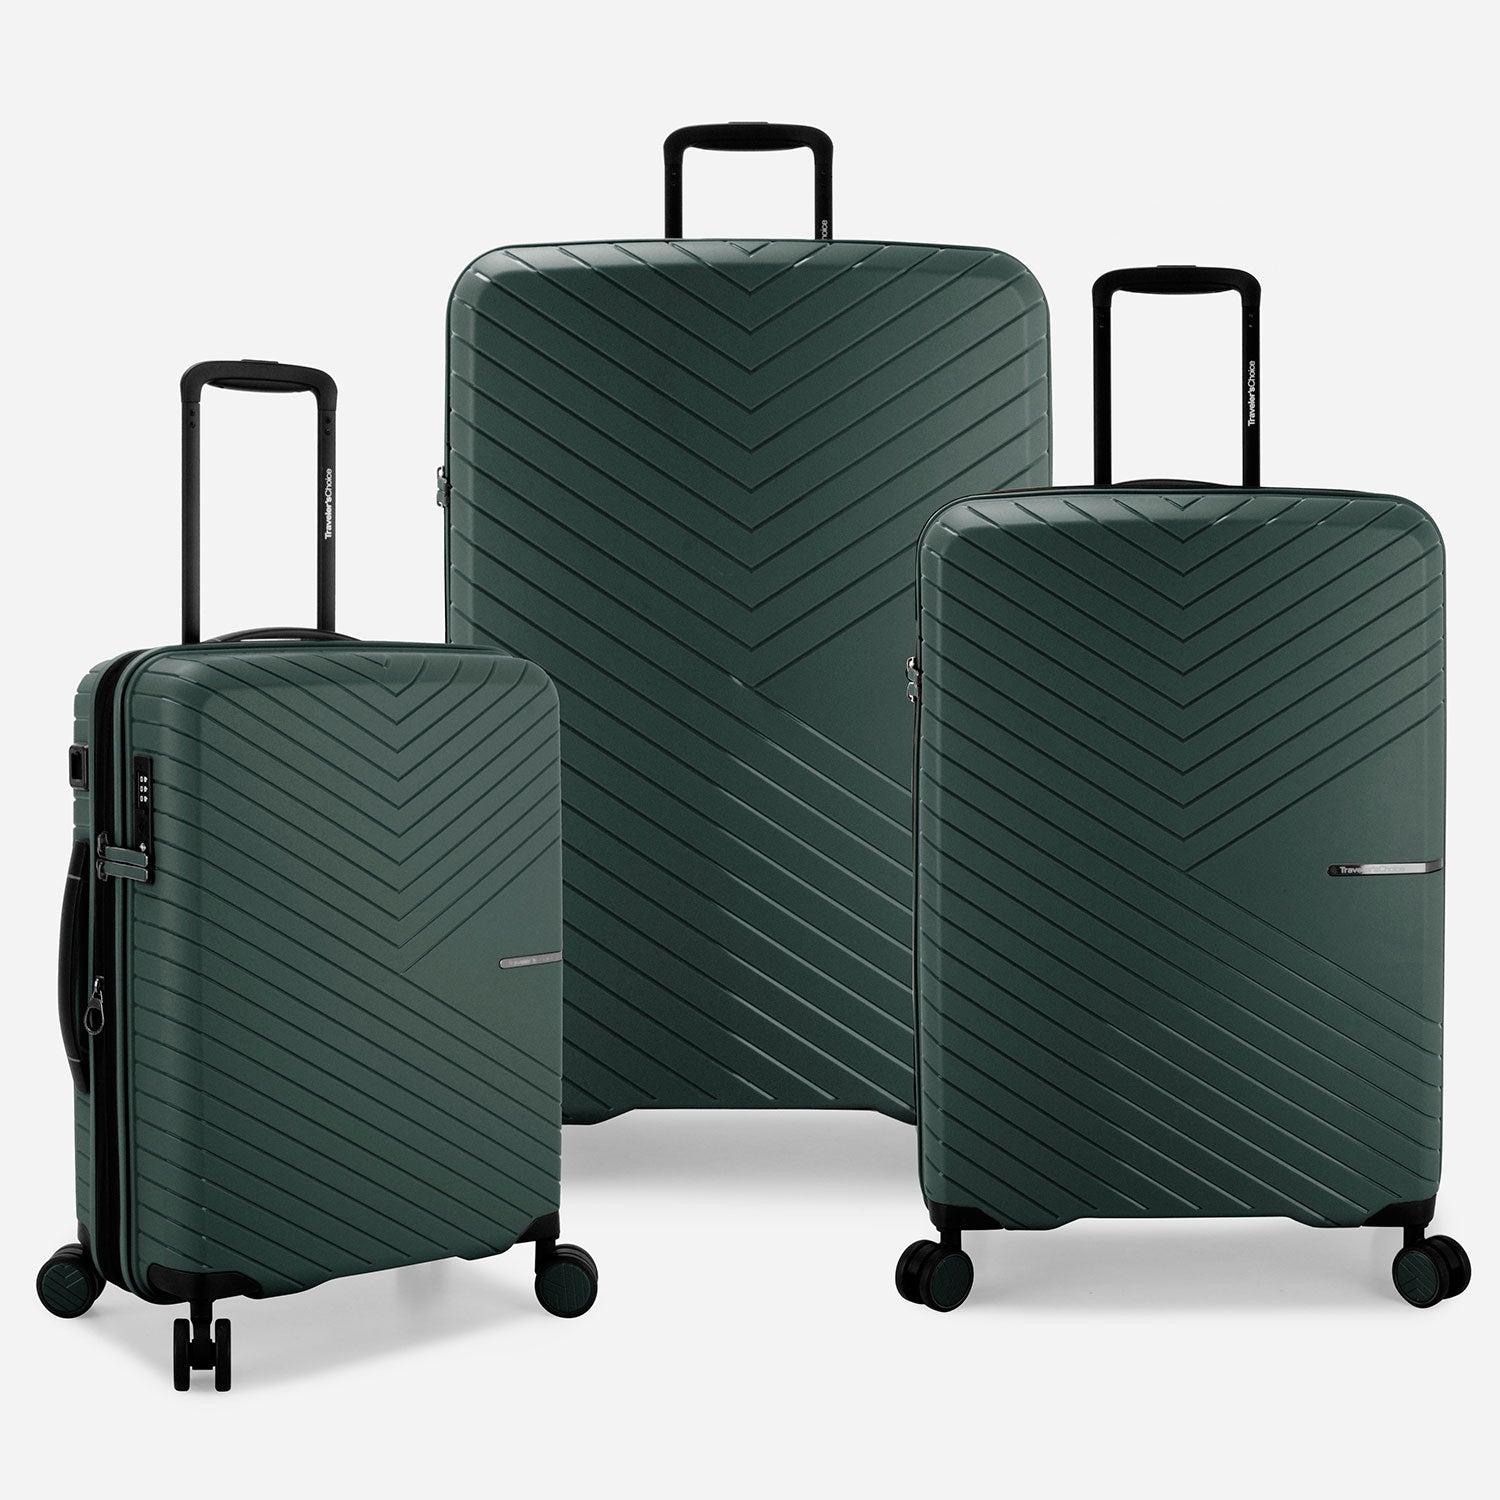 American Tourister Curio 3 Piece Hardside Set - Luggage | eBay